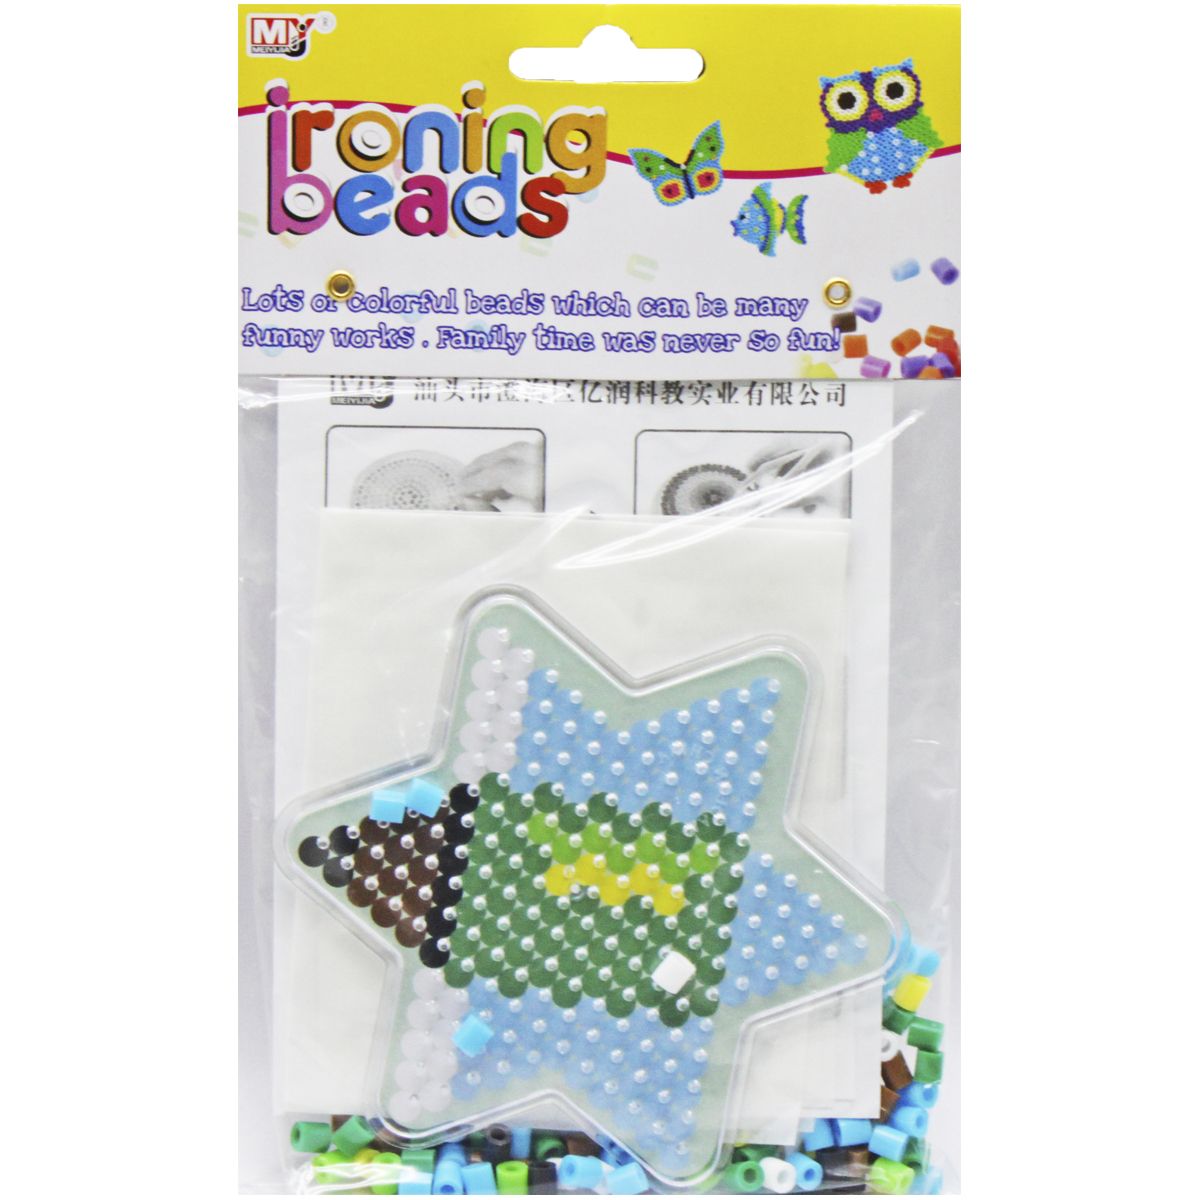 Термомозаика "Ironing beads: Звездочка"